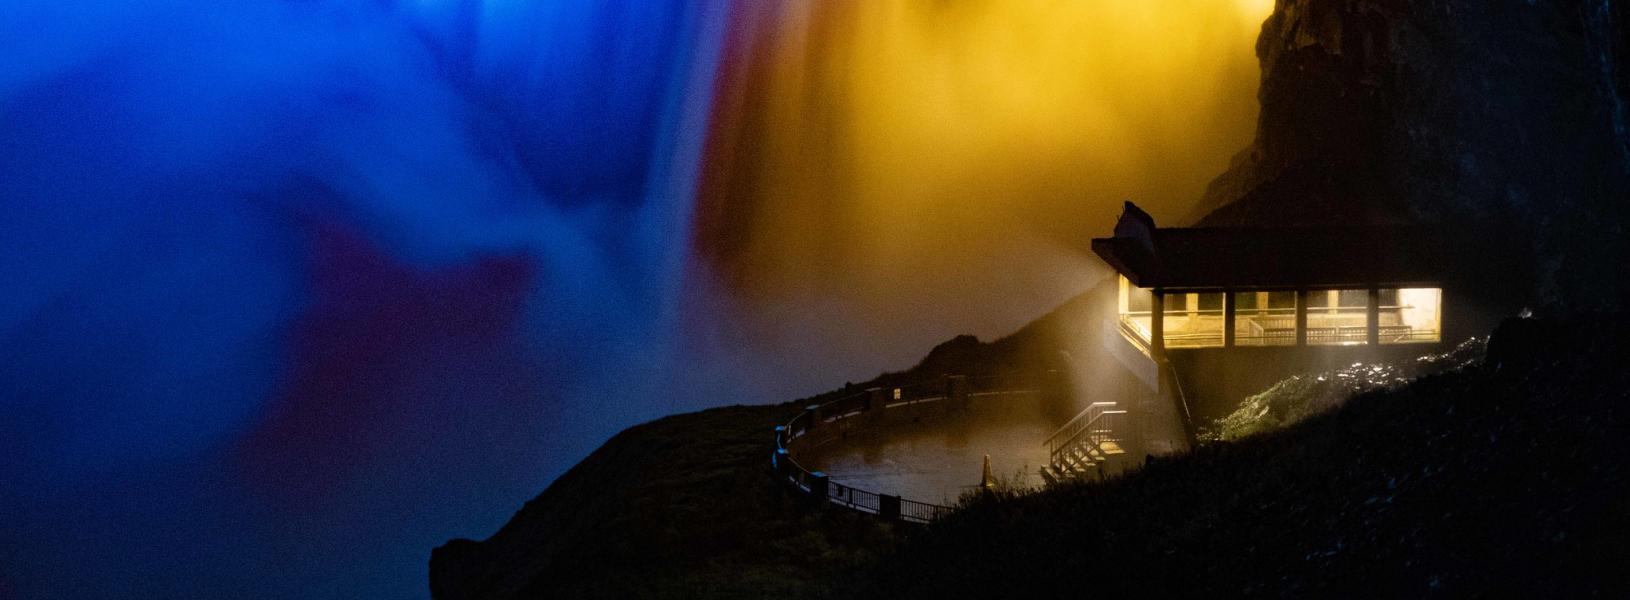 Niagara Falls at night lit up in blue and yellow